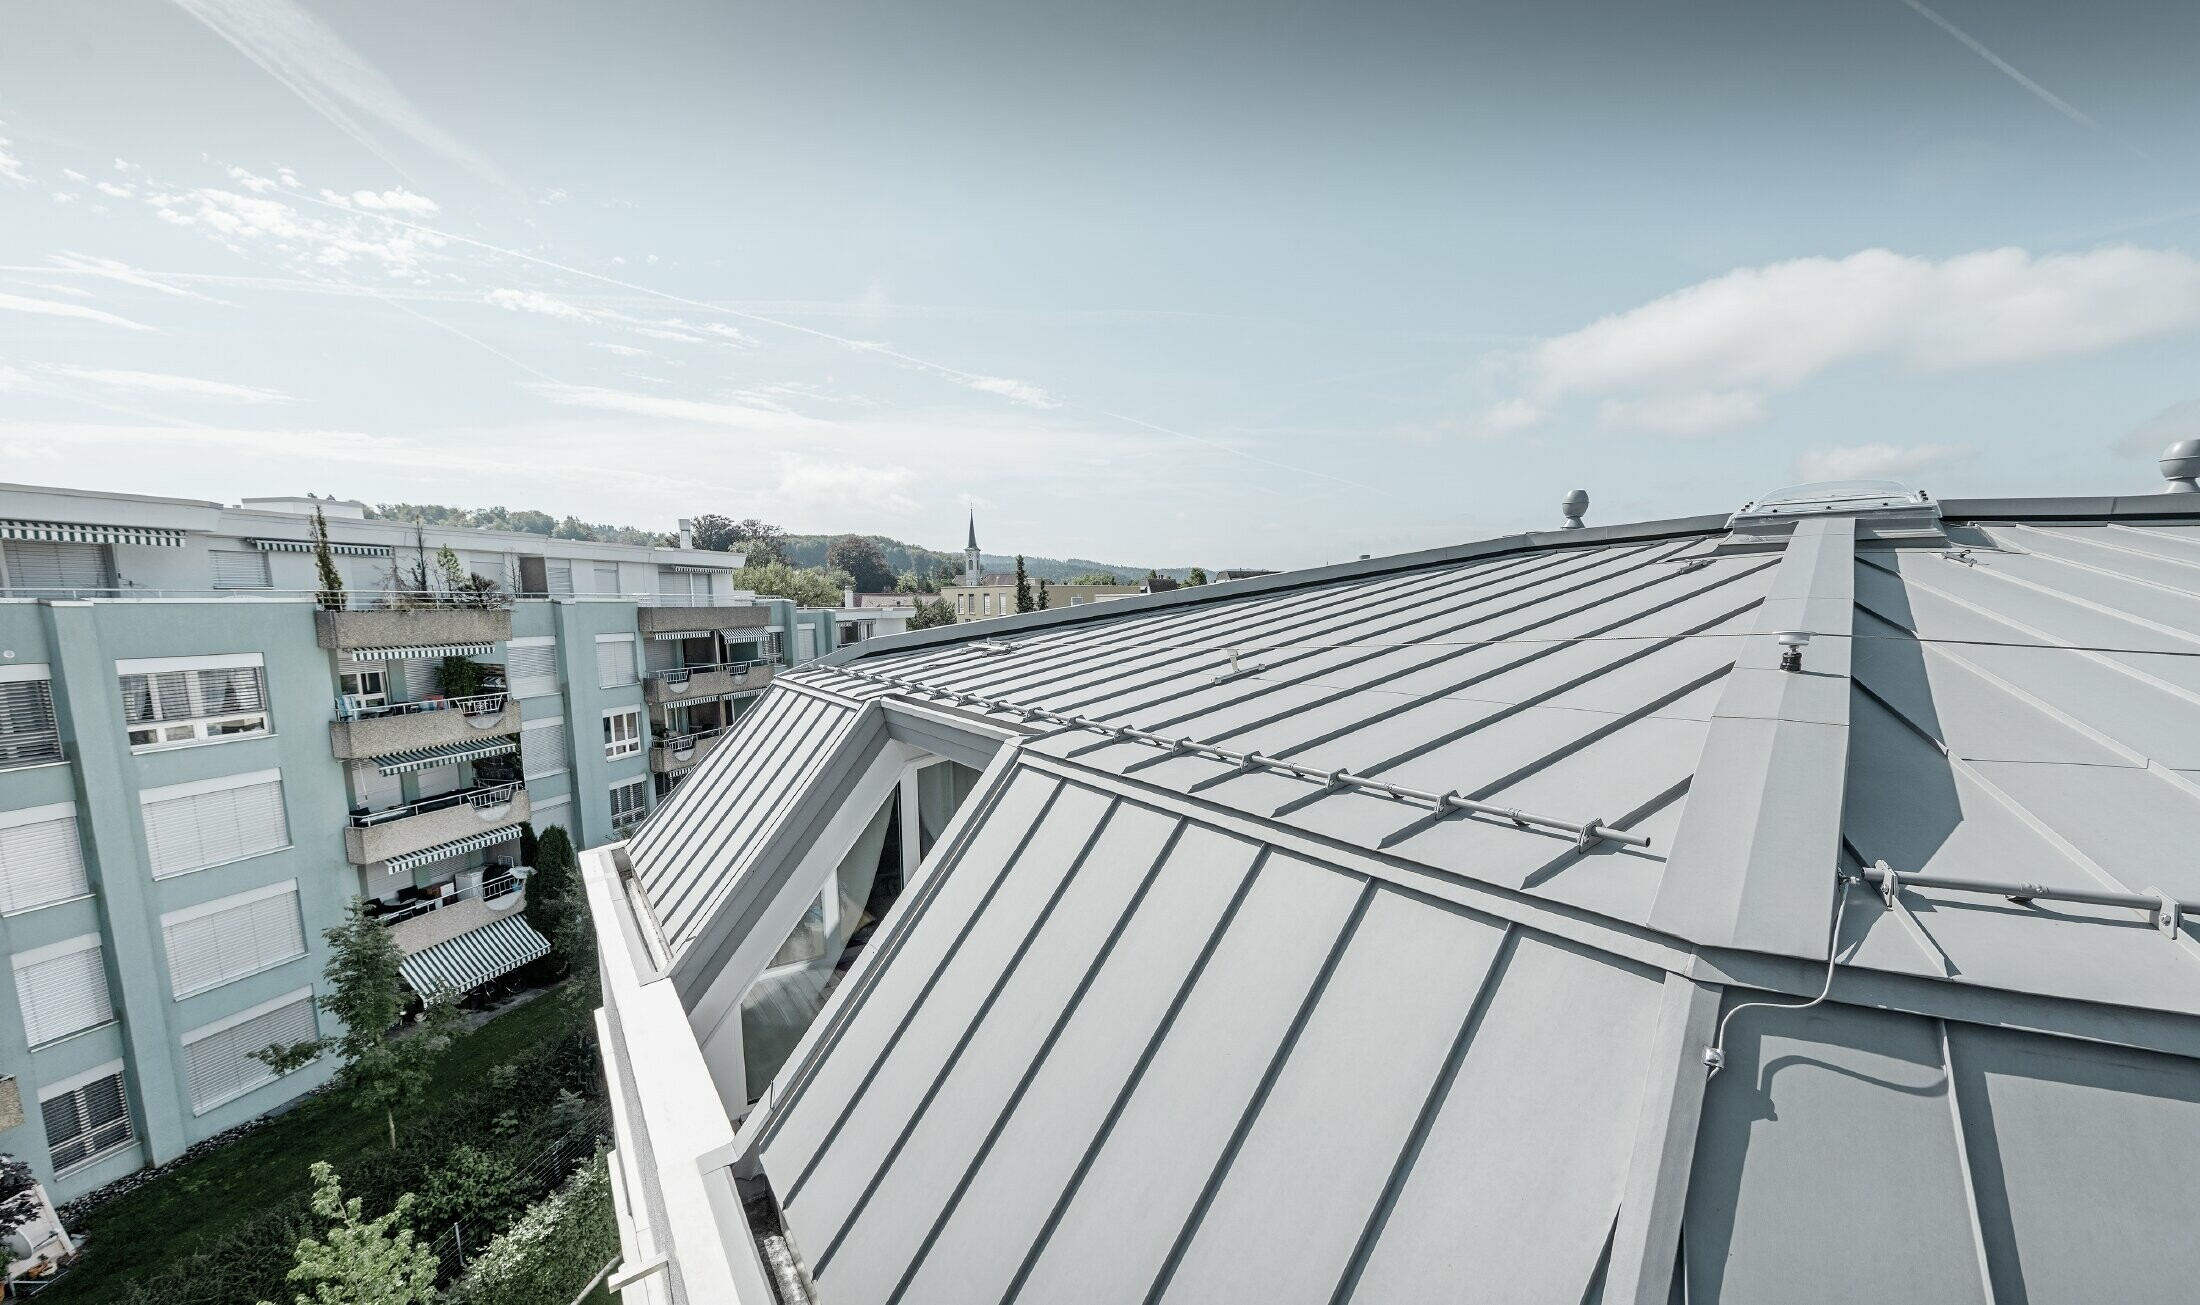 Detaljvisning av takflaten på et appartementshus. Ståfalstak utført med PREFA Prefalz i patinagrå.